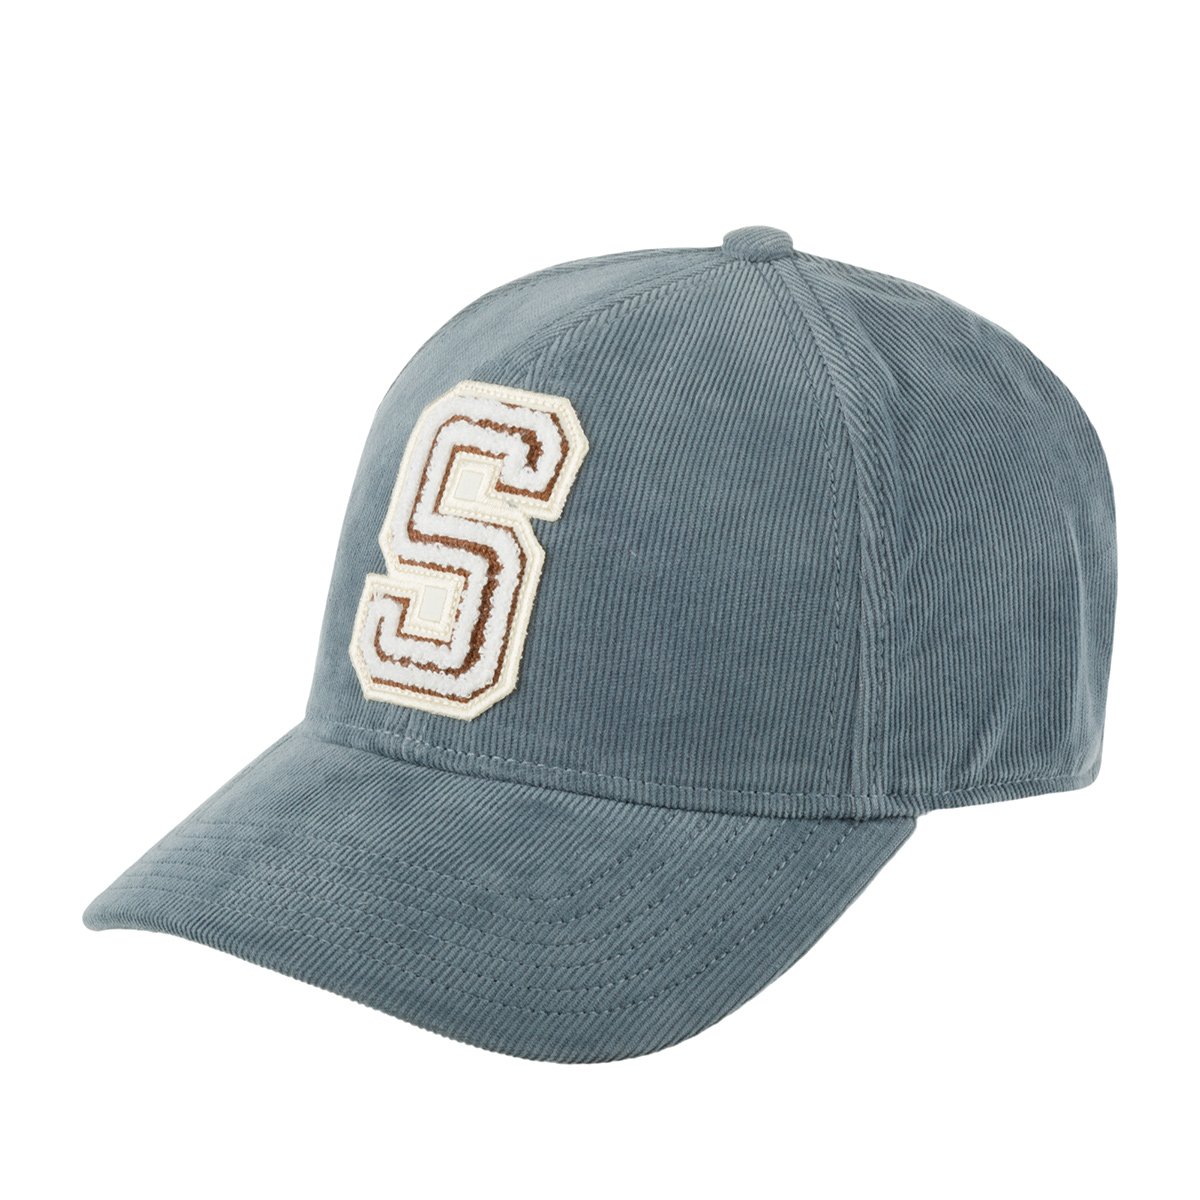 Бейсболка унисекс Stetson 7721147 BASEBALL CAP SUSTAINABLE CORDUROY голубая, one size